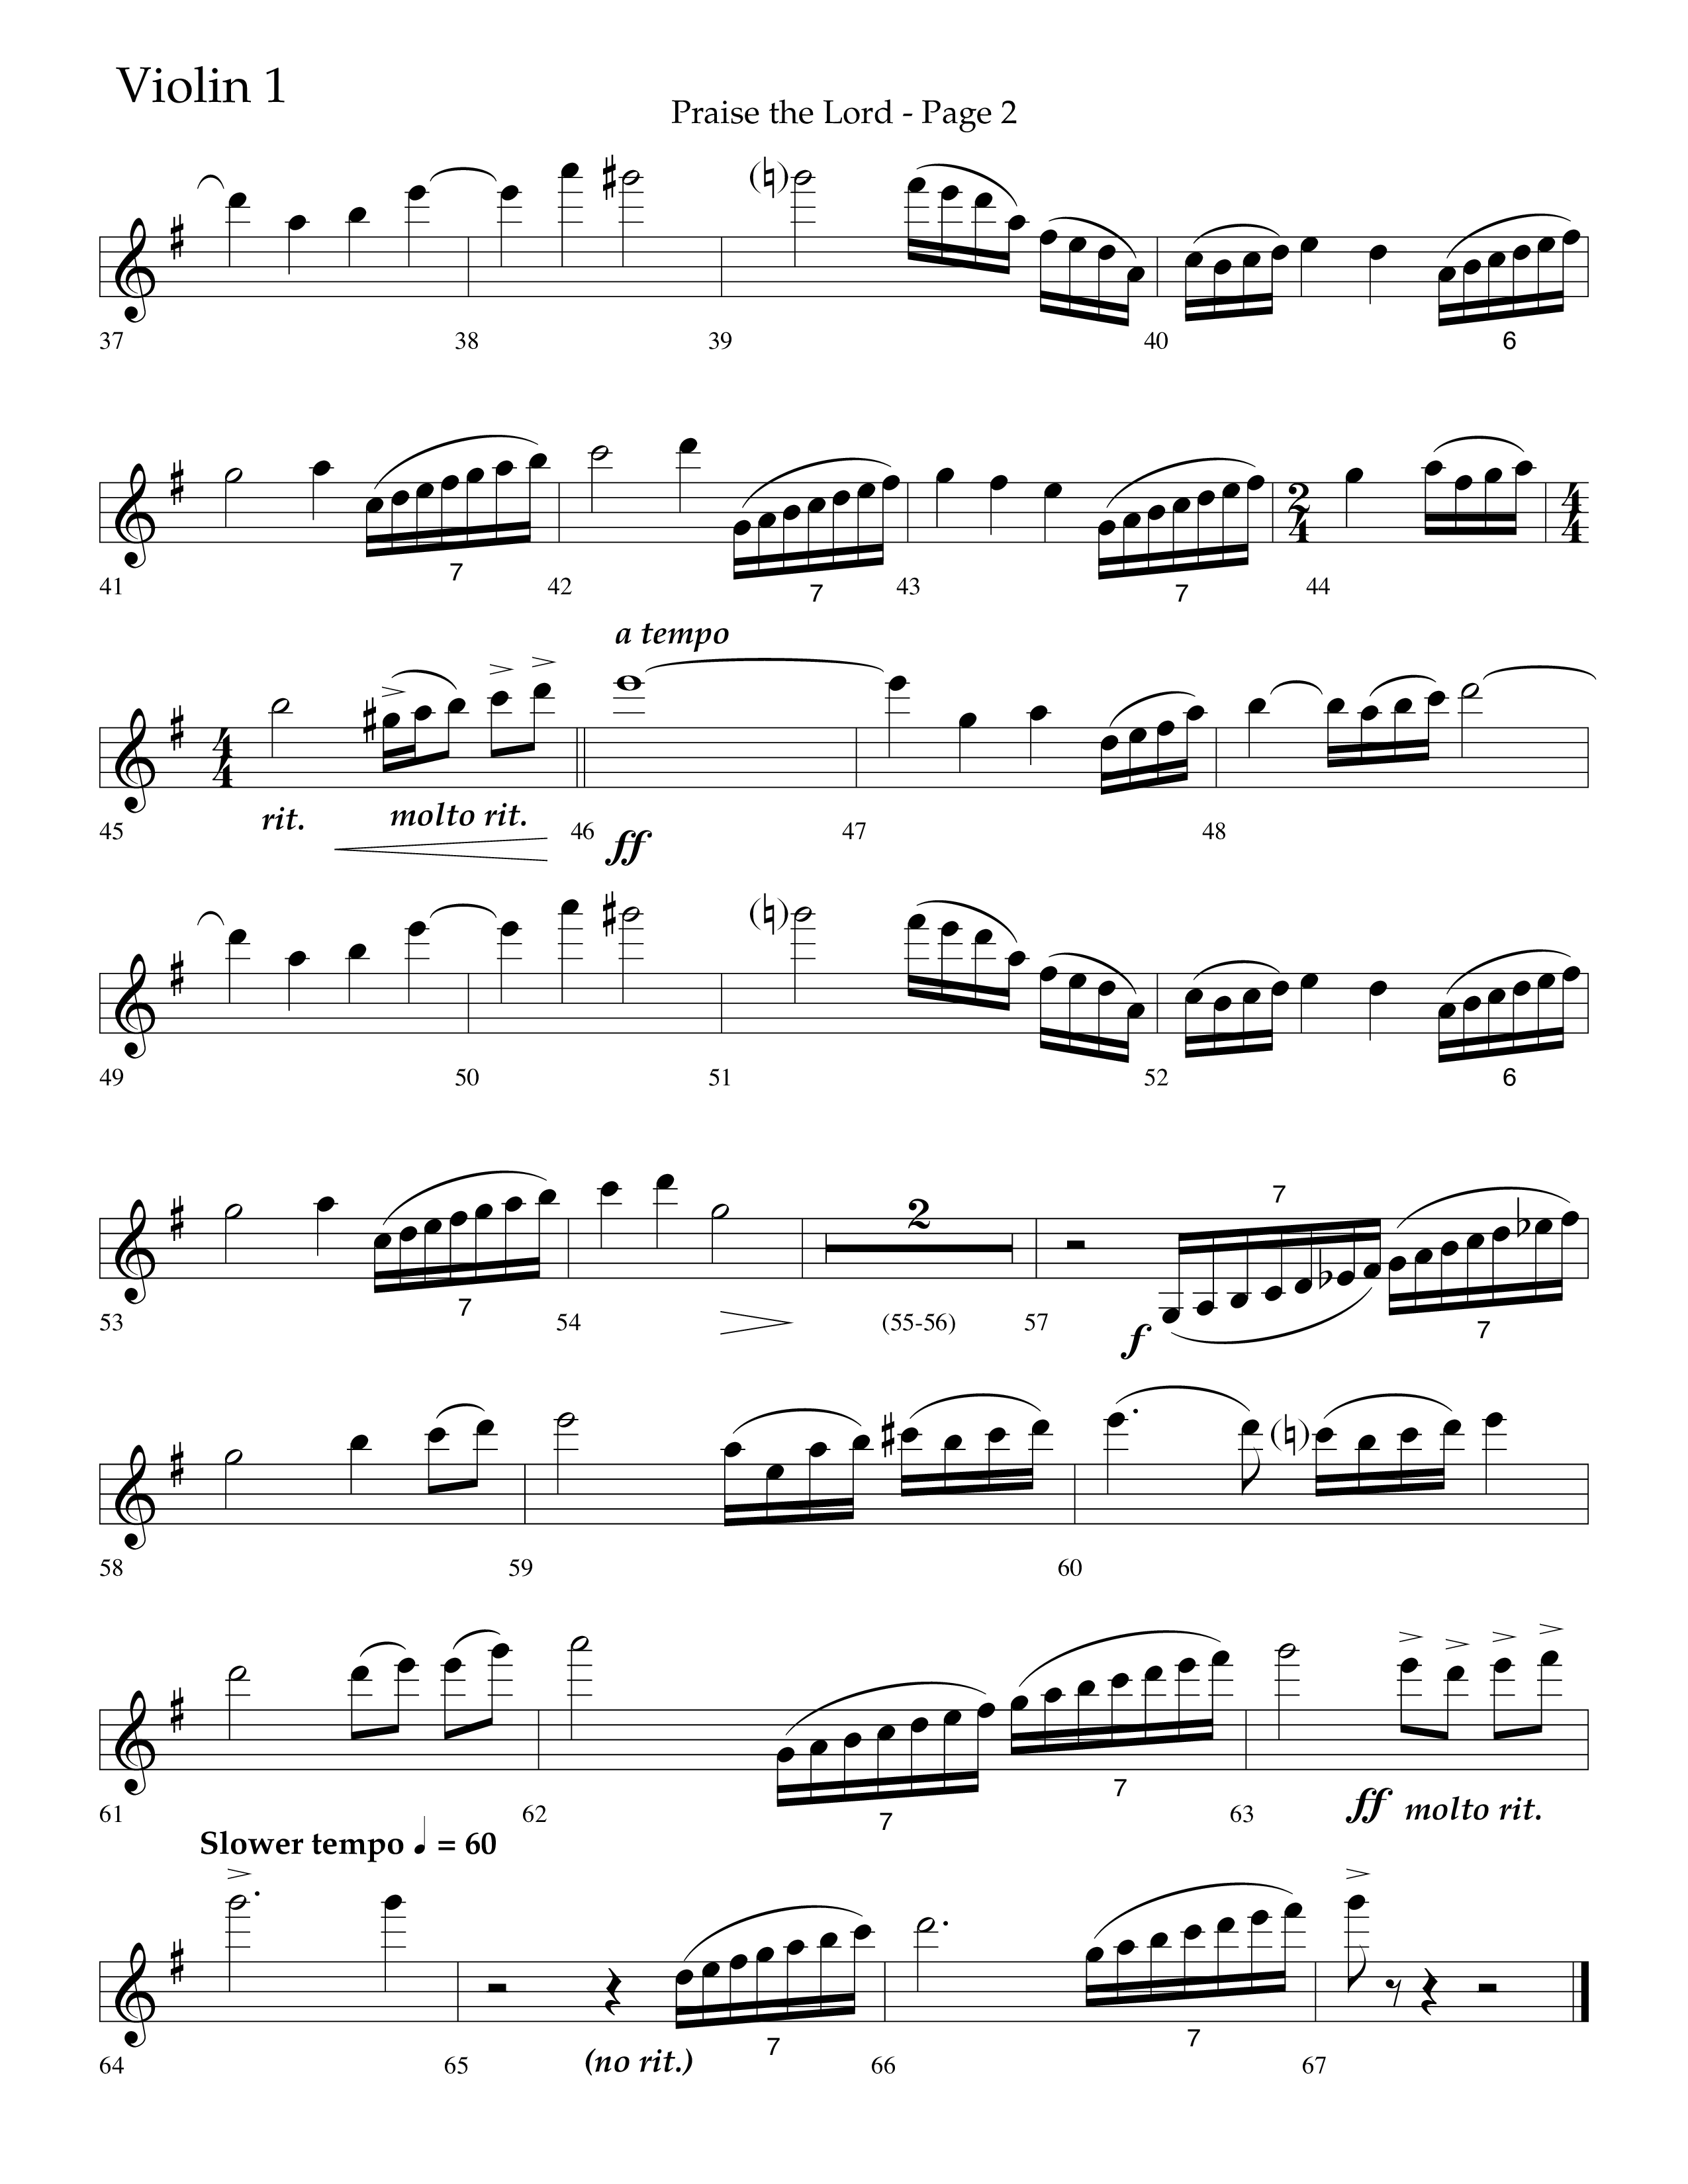 Praise The Lord (Choral Anthem SATB) Violin 1 (Lifeway Choral / Arr. Marty Hamby)